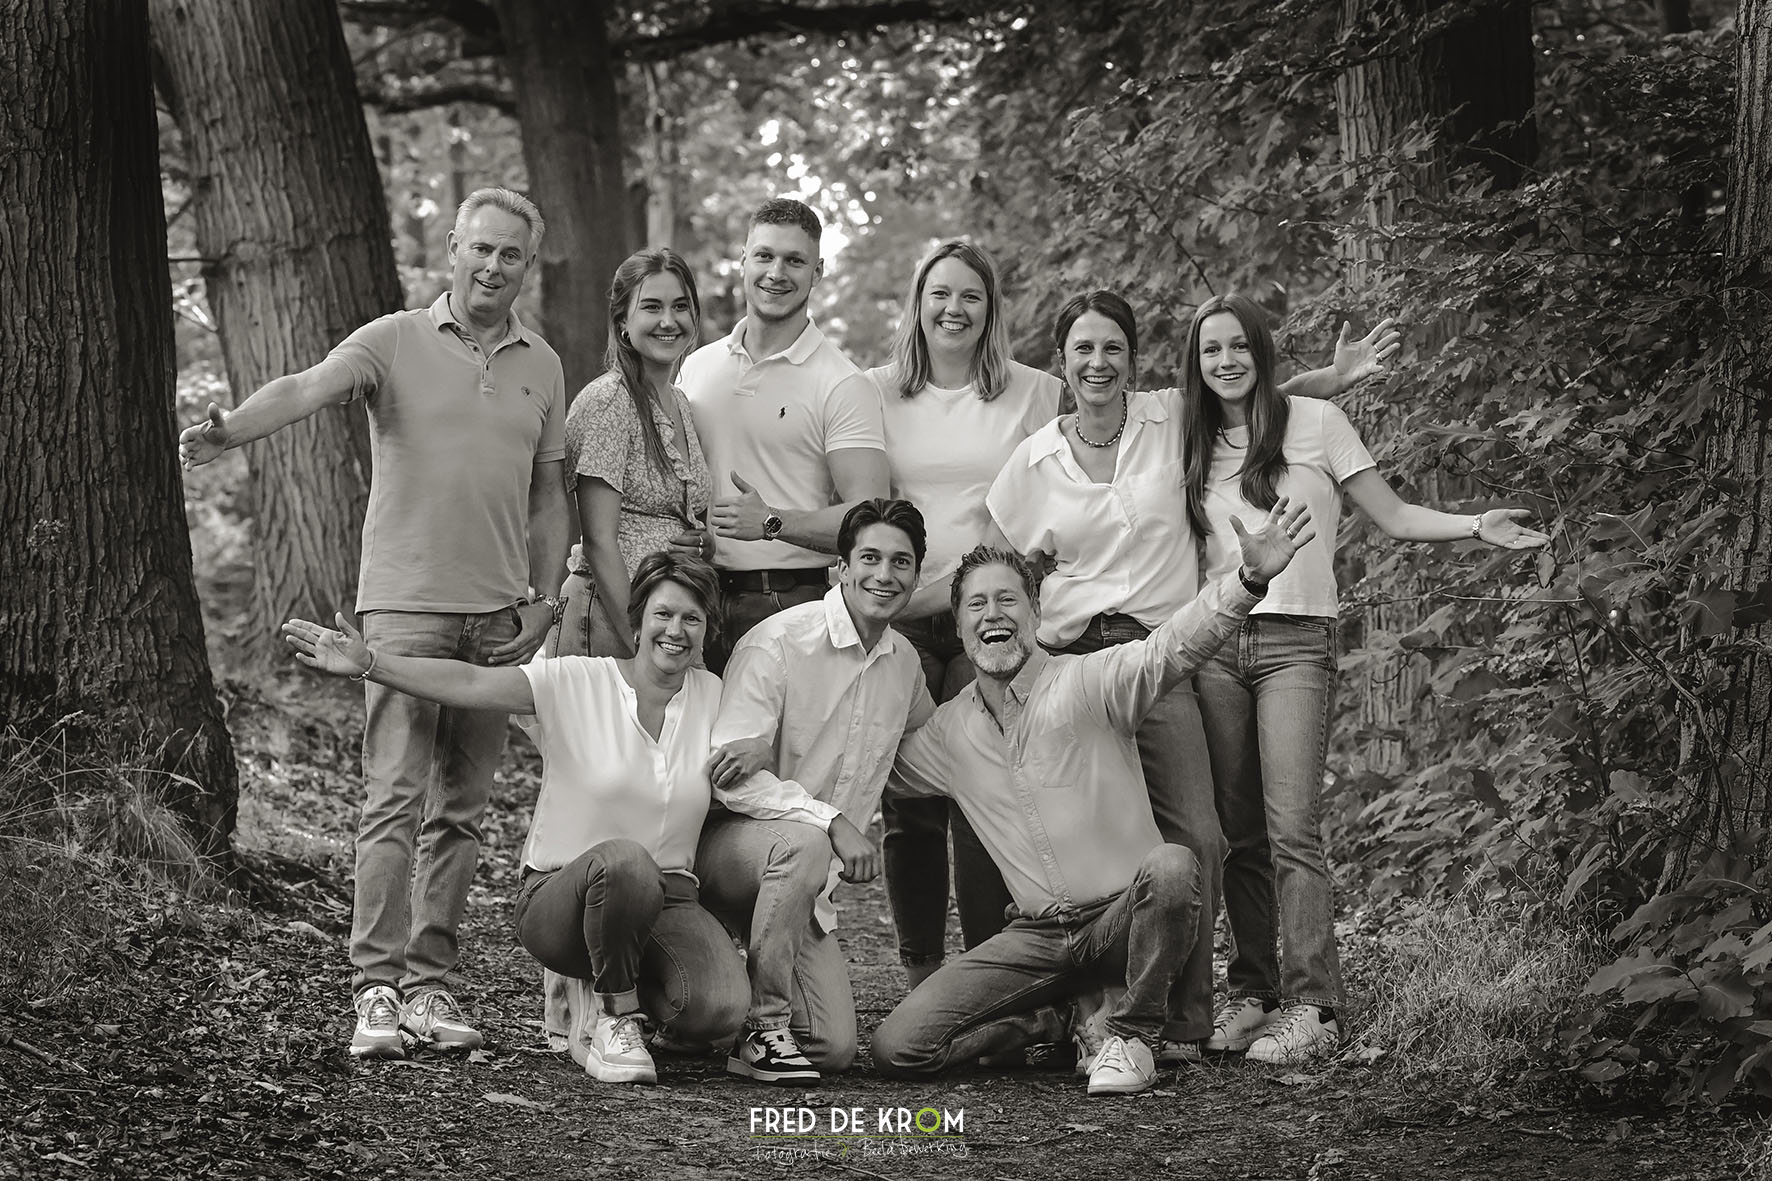 Familiefoto_familie fotoshoot_zwart wit foto op pad in bos Eindhoven.